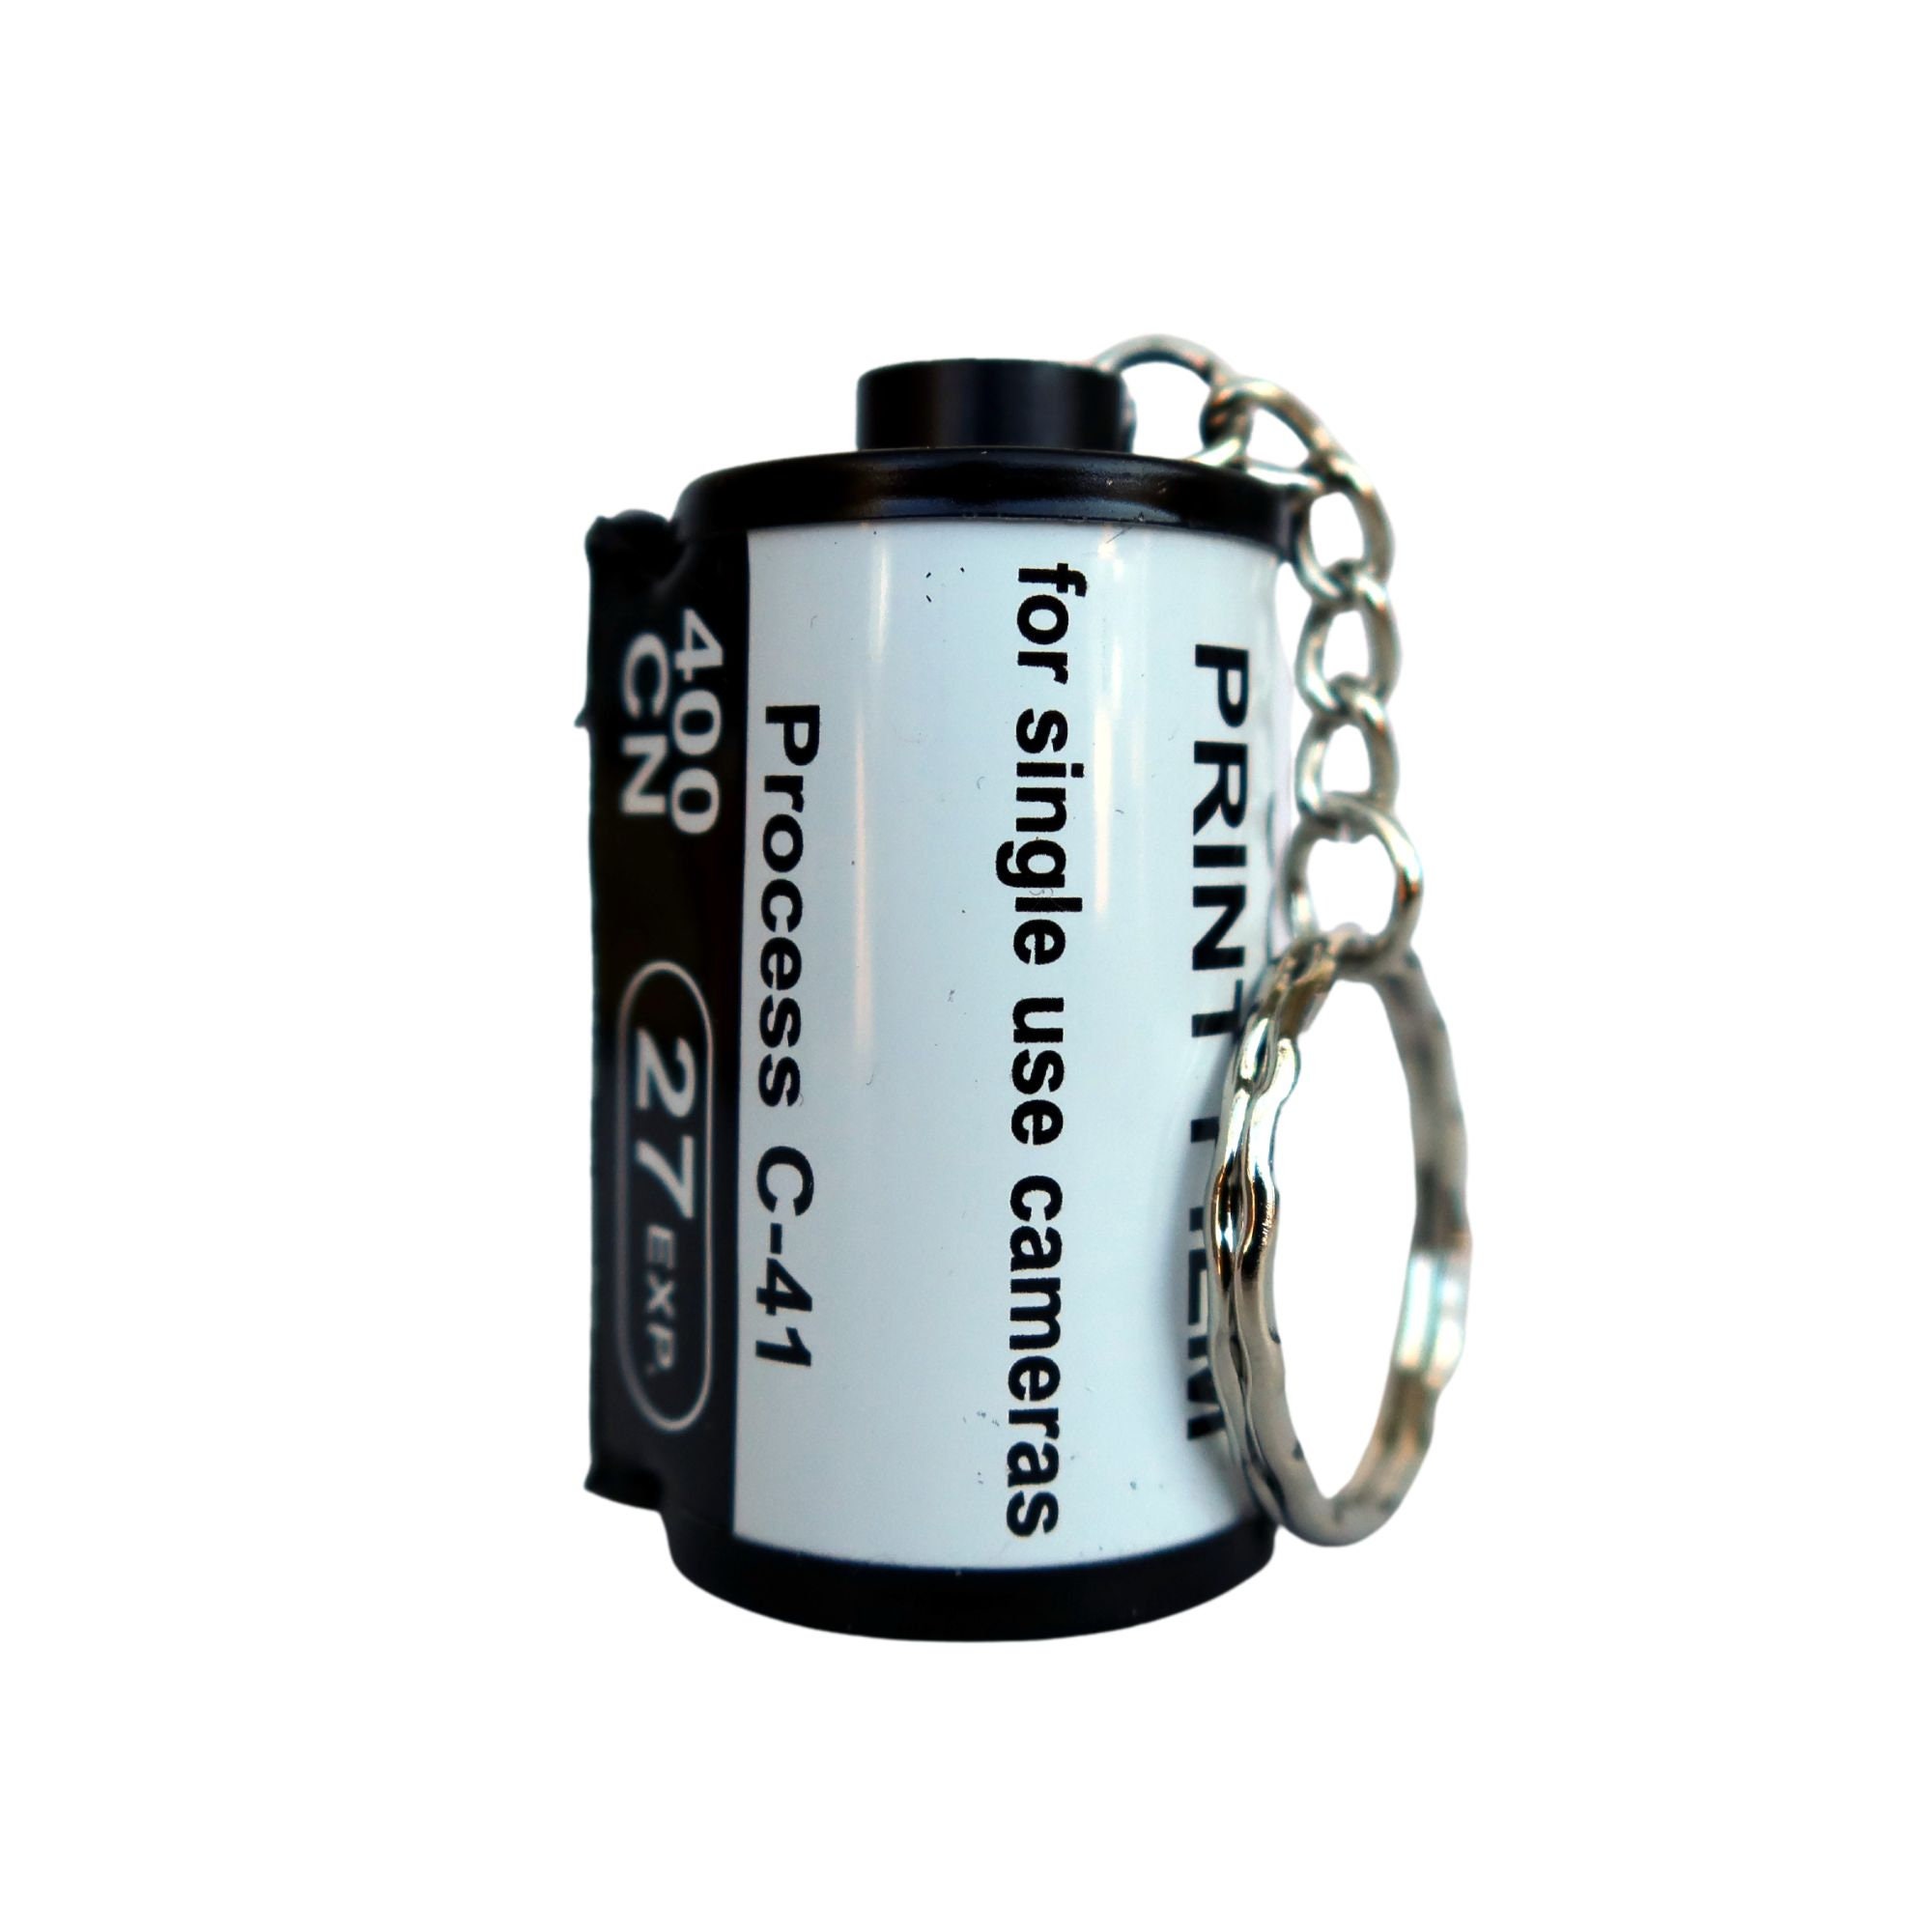 Keychain film canister film cartridge 35 mm 35mm film analog camera  Hanalogital pendant keychain gift films Kodacolor VR Plus